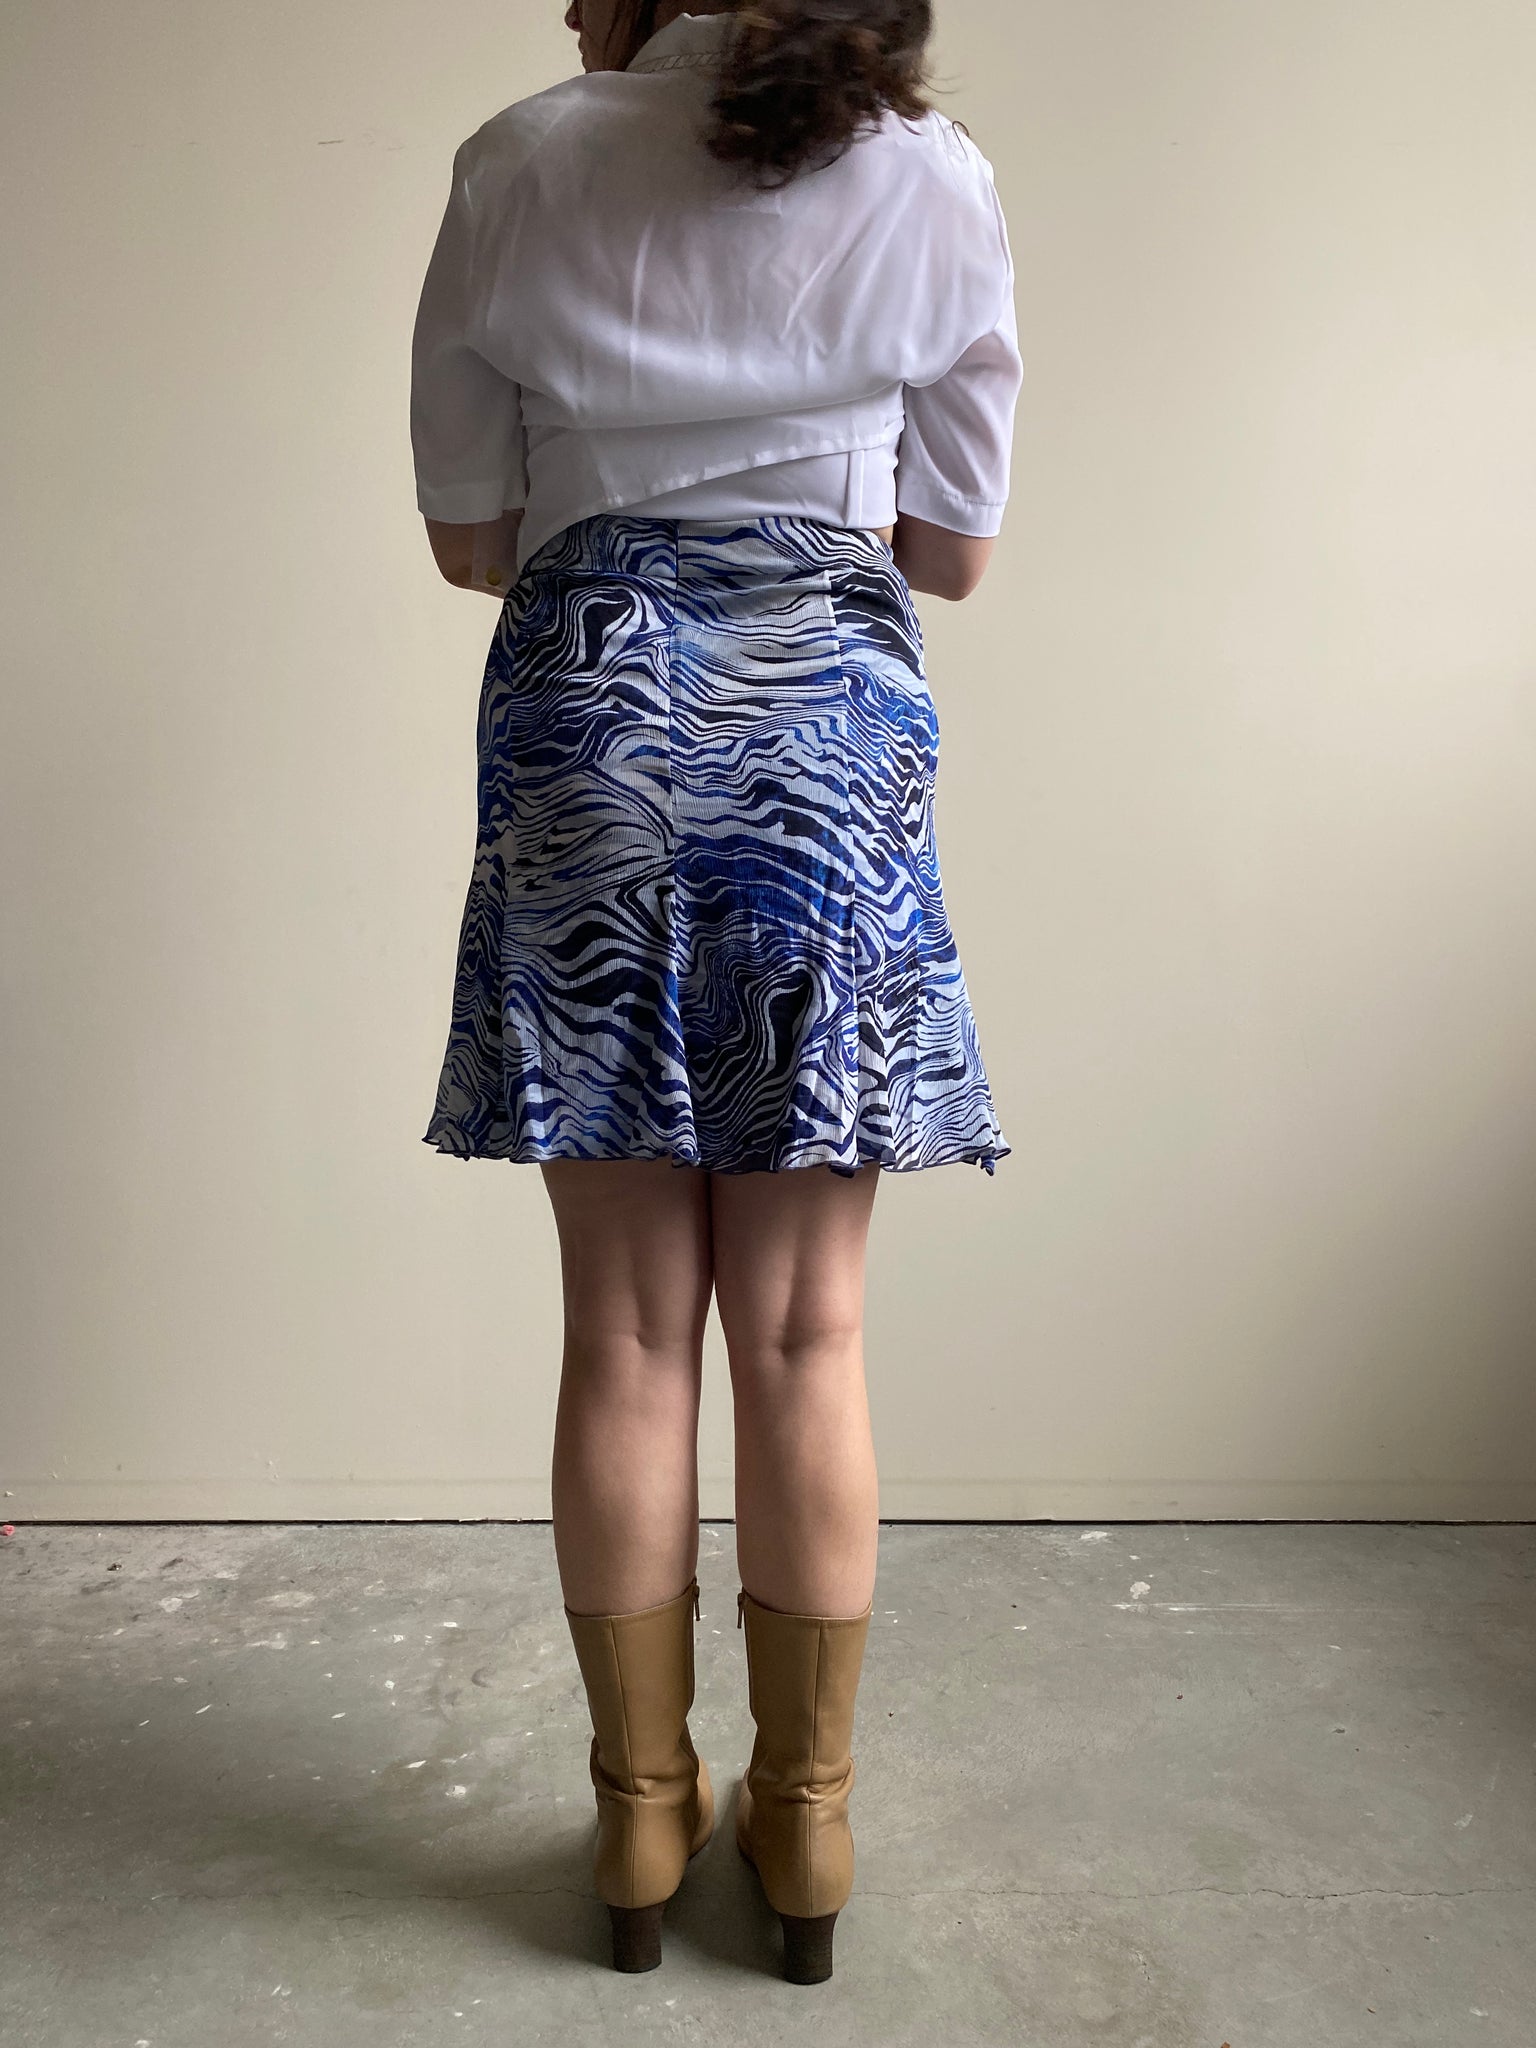 Blue, white, and black funky silk skirt by Leggiadro (S)